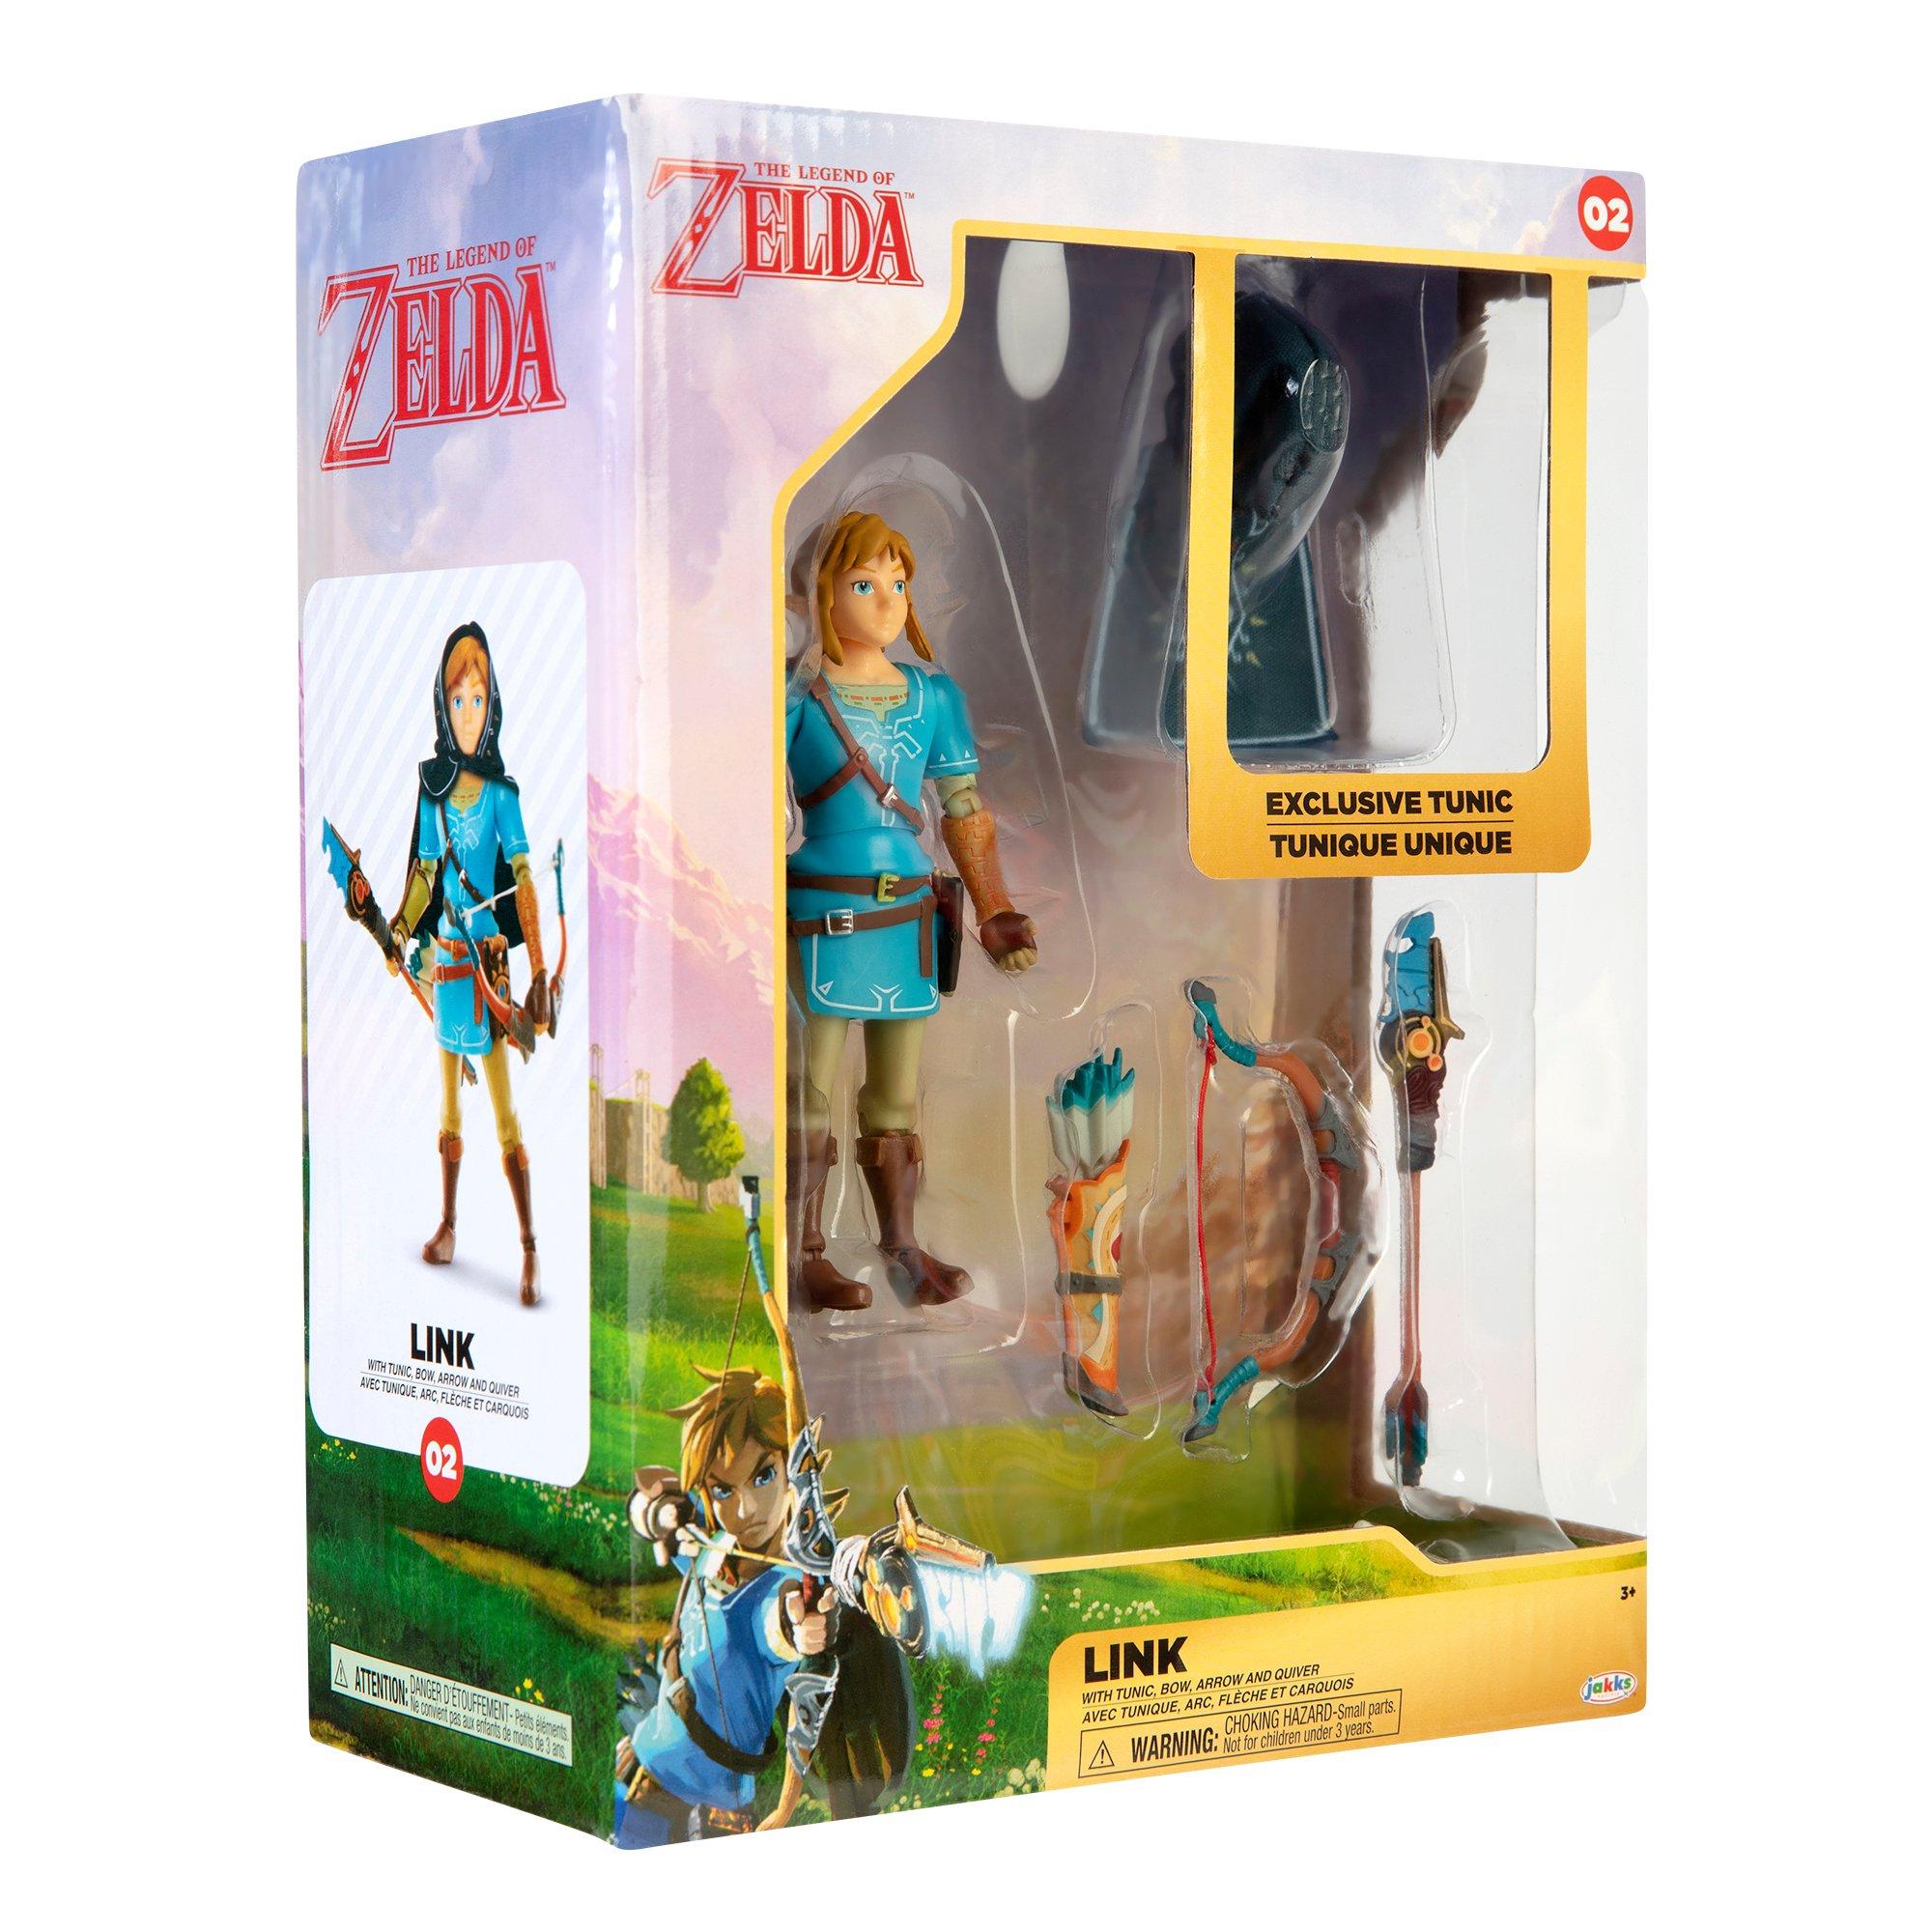 6Pcs/Set Game The Legend of Zelda Figures Periphery Toys Link